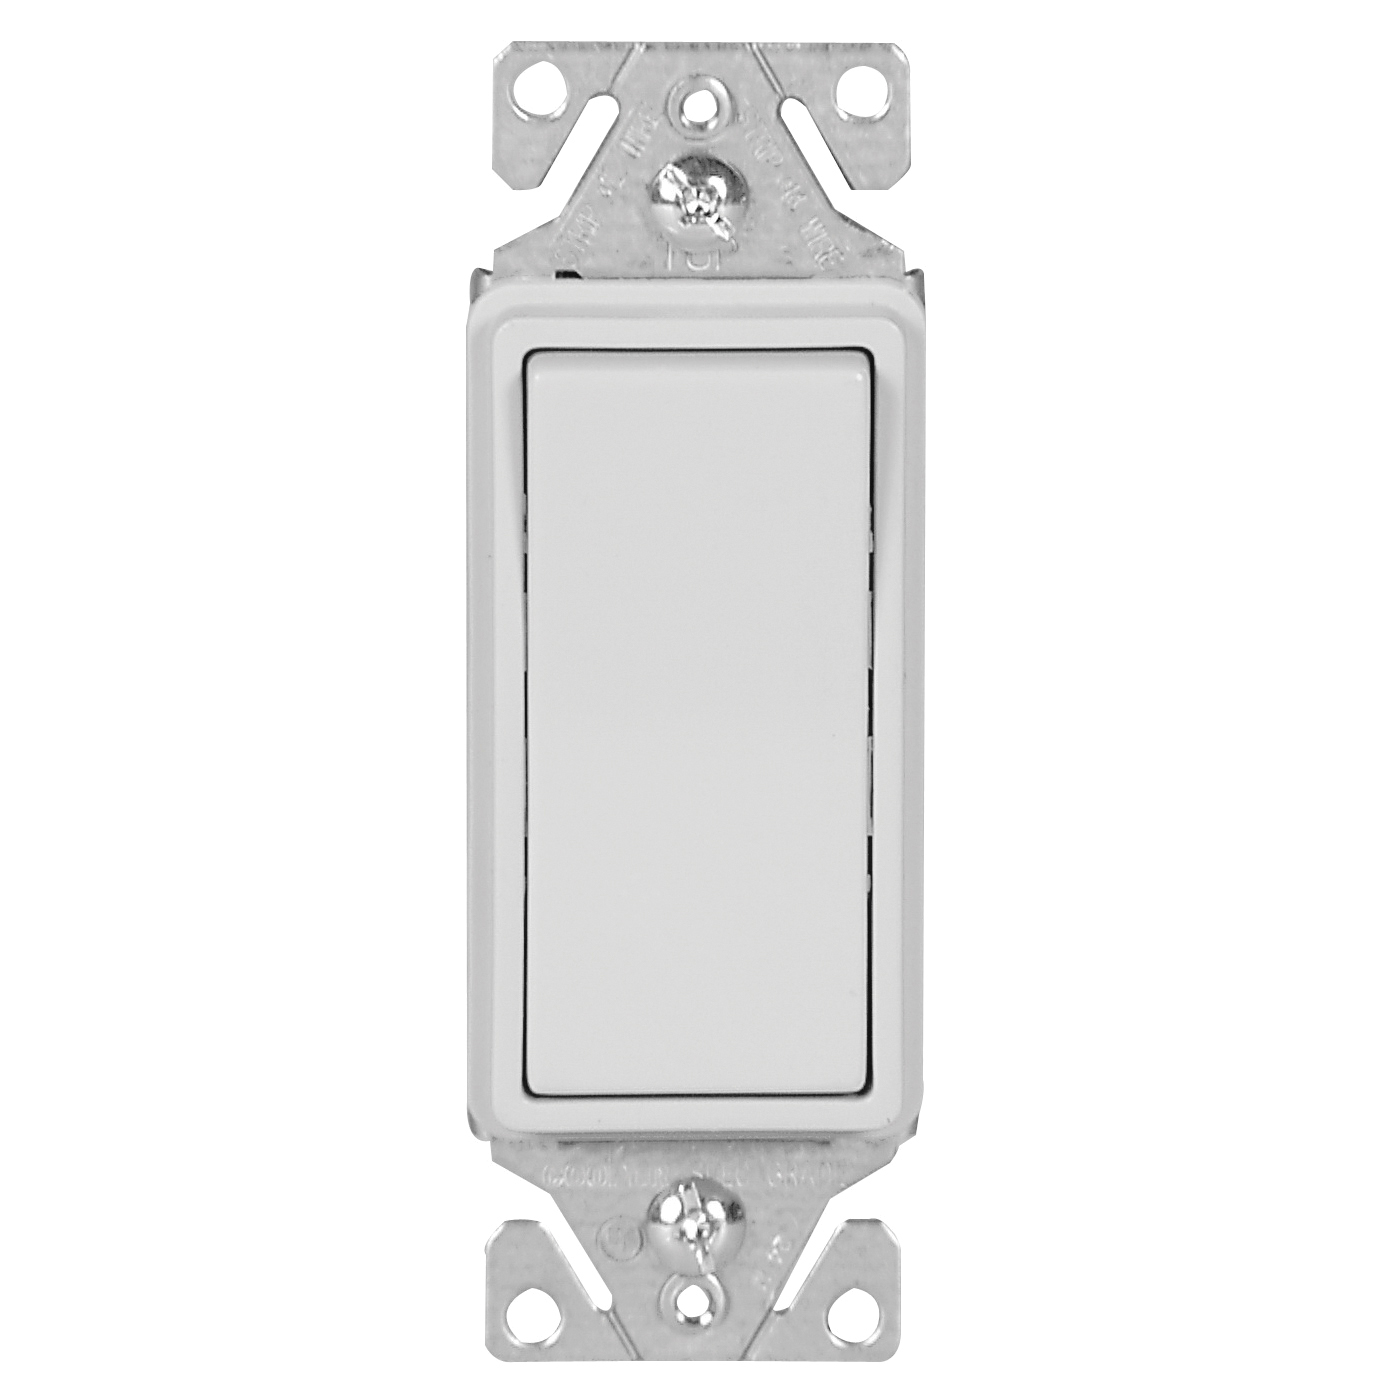 7500 7513W-BOX Rocker Switch, 15 A, 120/277 V, 3-Way, Lead Wire Terminal, White